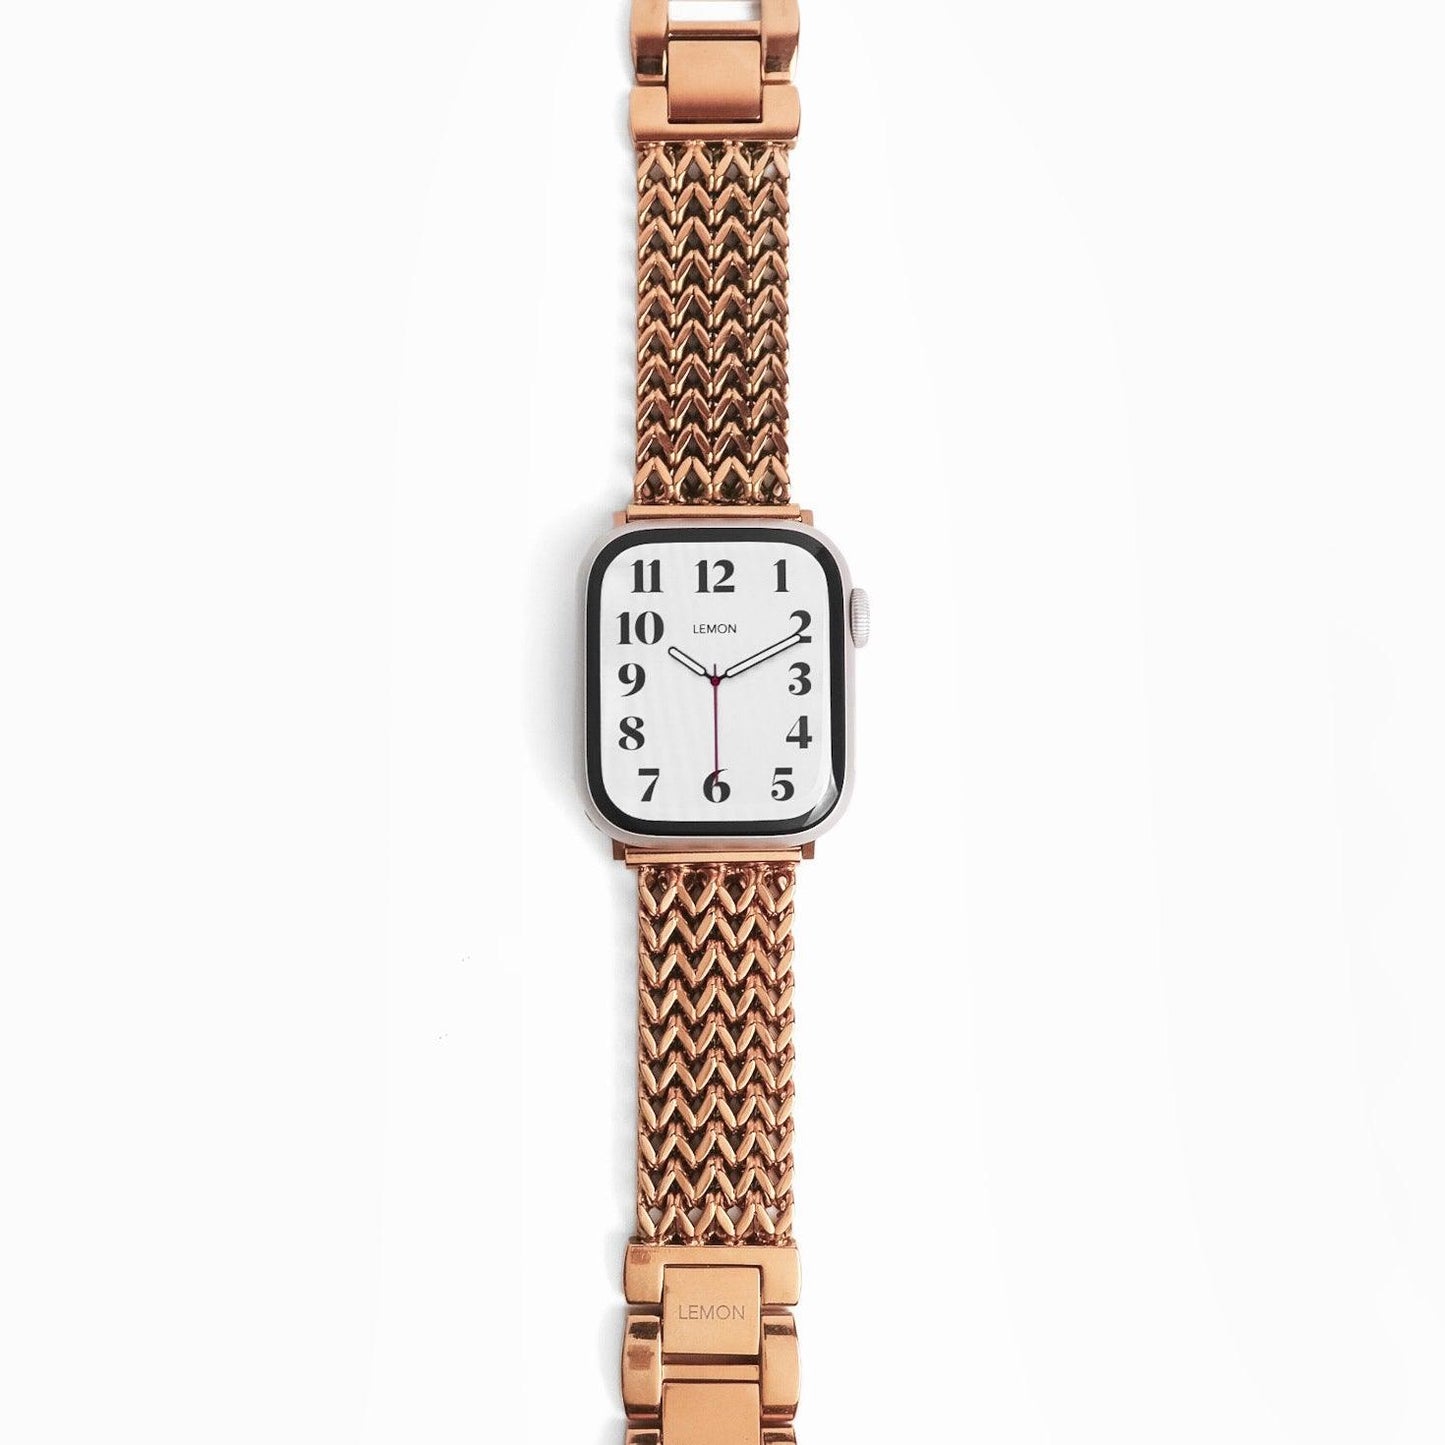 (St-Steel) Infinity Mesh Apple Watch Bracelet - 18k Rose Gold Plated